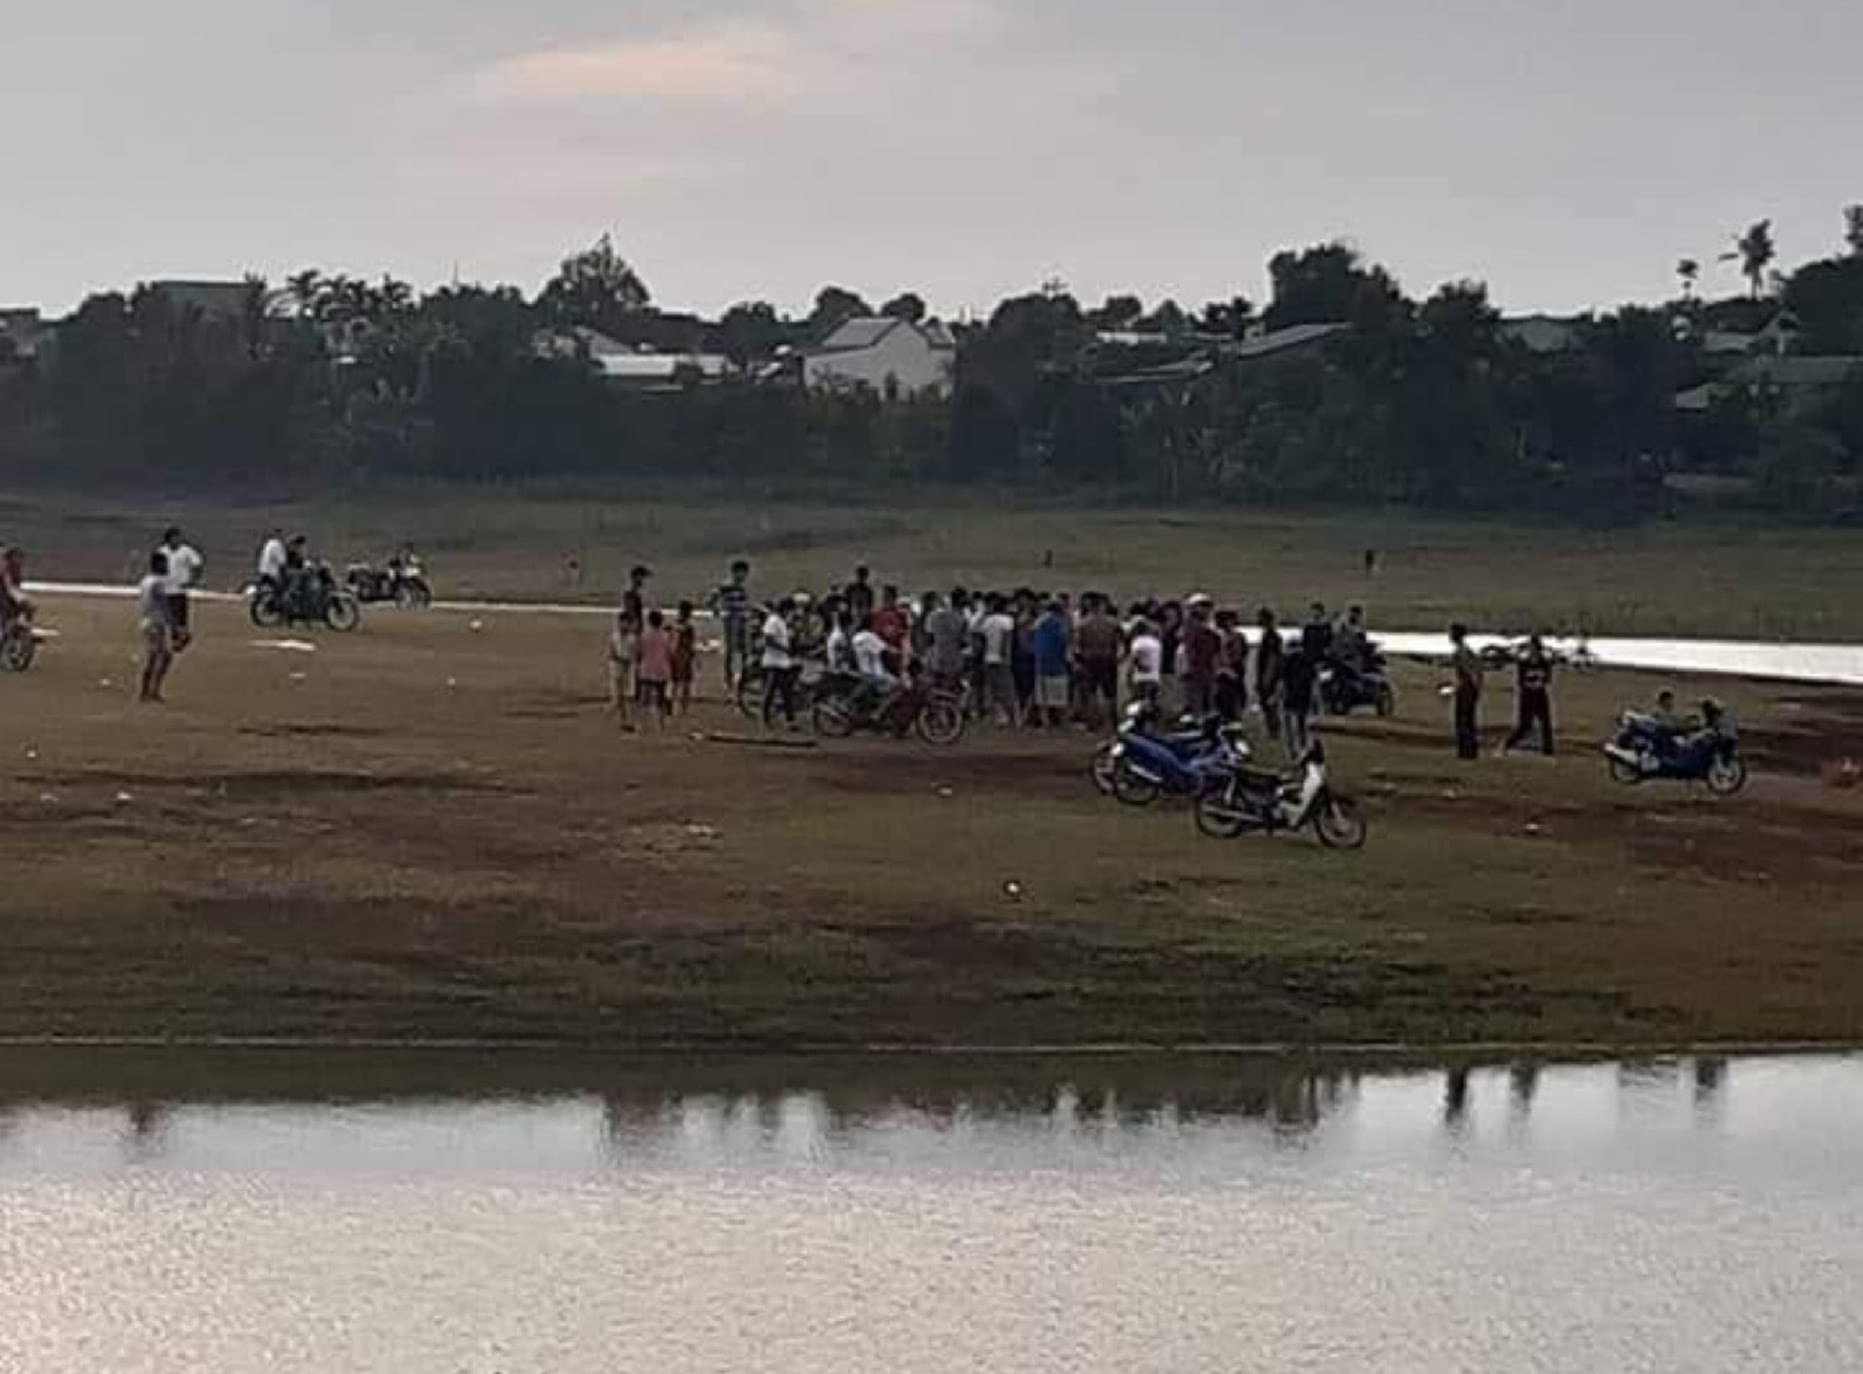 Two children drown while flying kites near lake in Vietnam